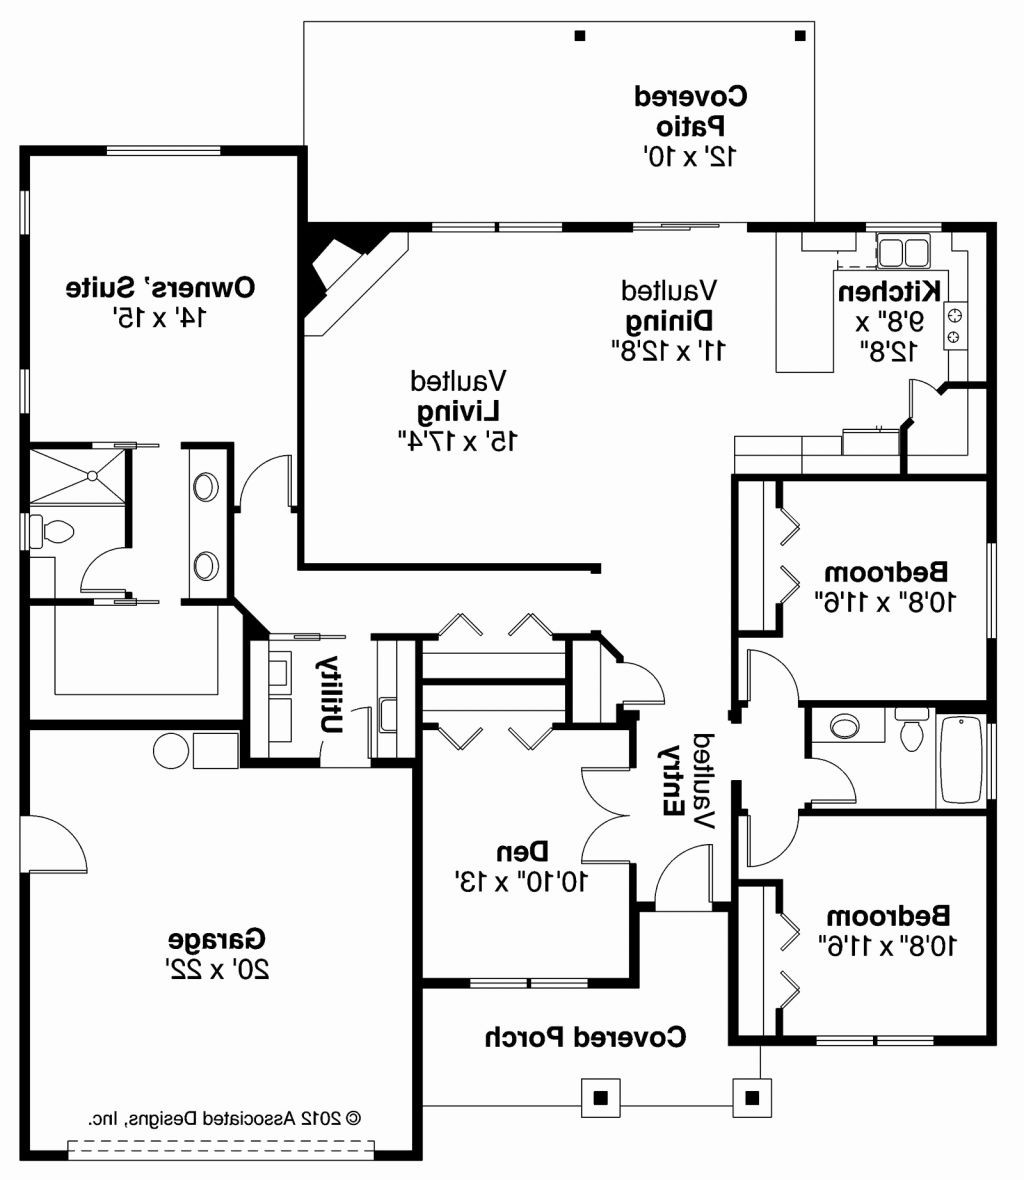 Bmw Wiring Diagrams Luxury House Wiring Diagram Electrical Floor Plan 2004 2010 Bmw X3 E83 3 0d